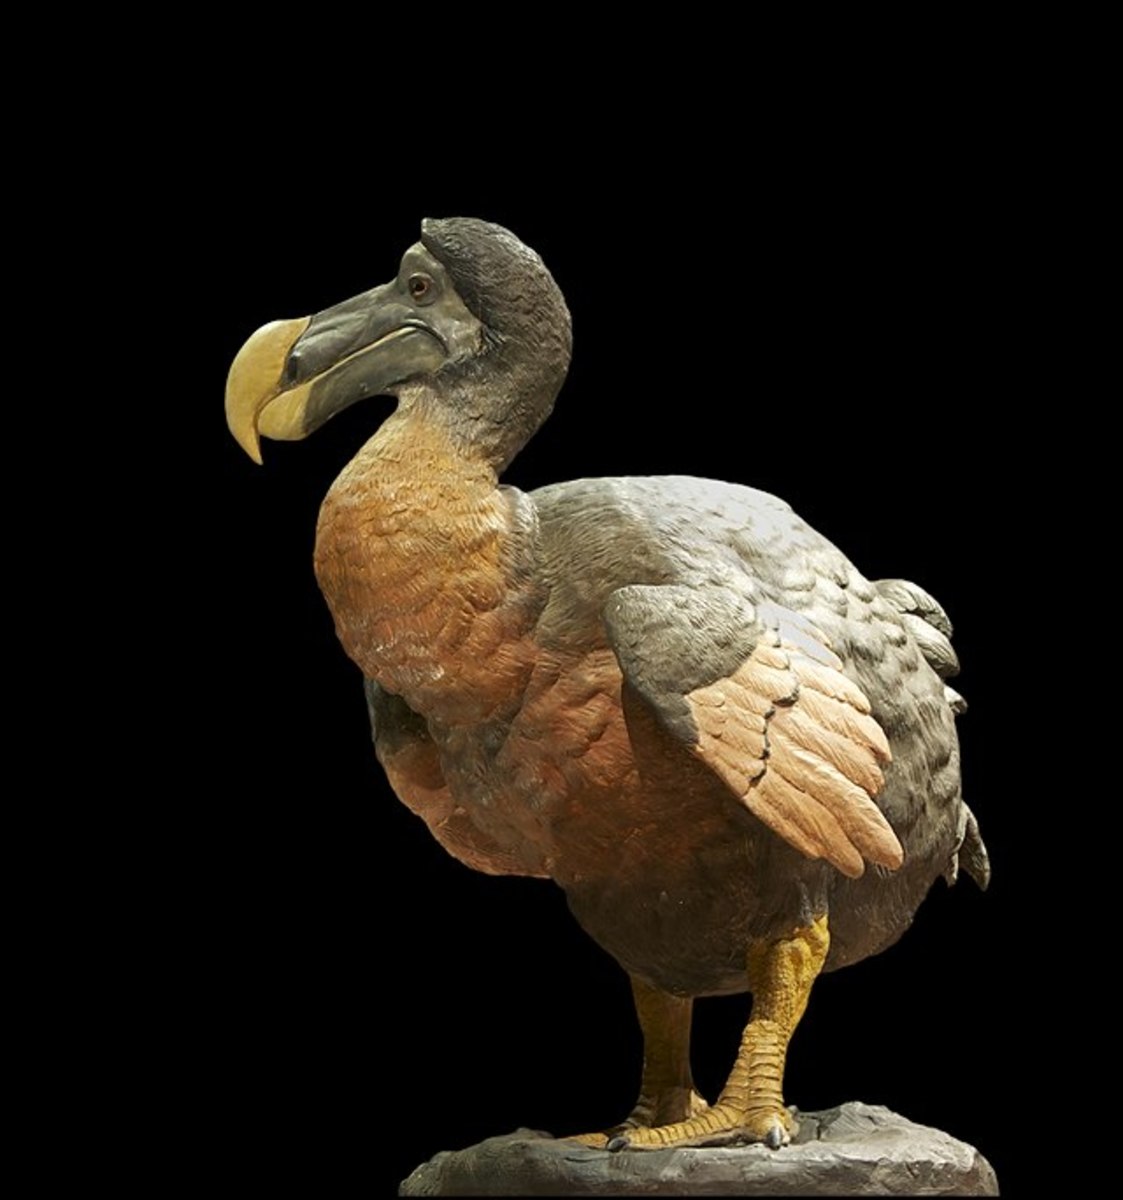 Dodo: Extinction of a Helpless Bird